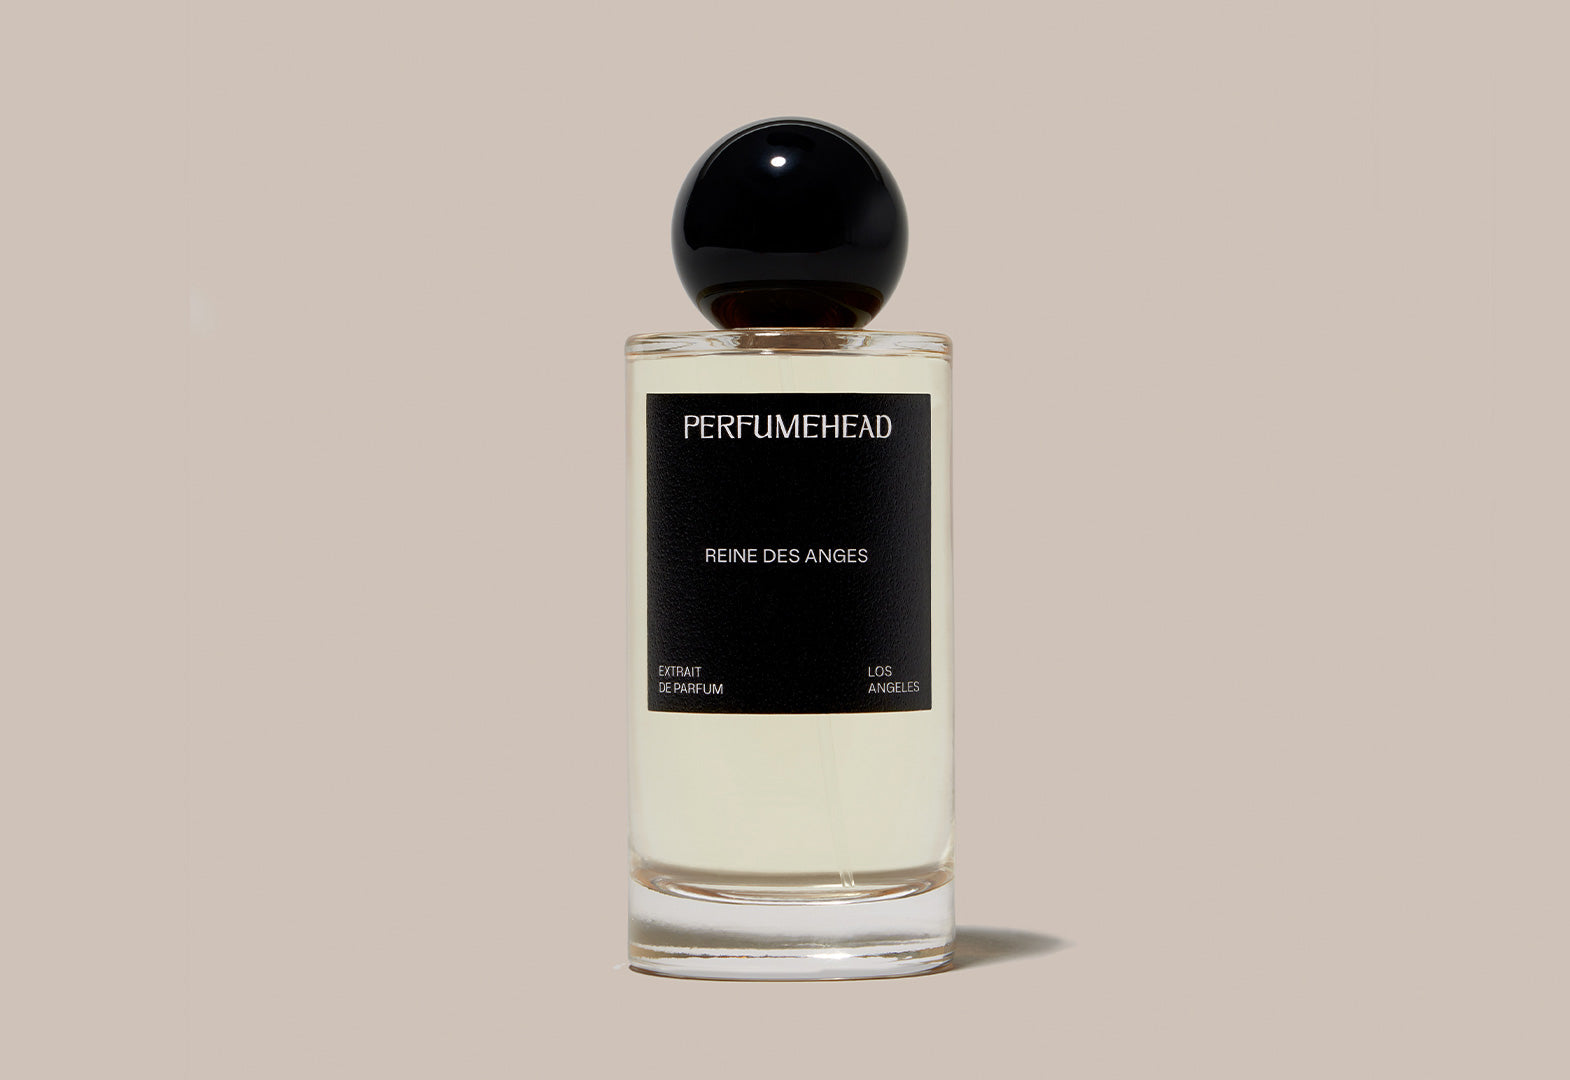 Reine des Anges by Perfumehead. 100ml bottle. 